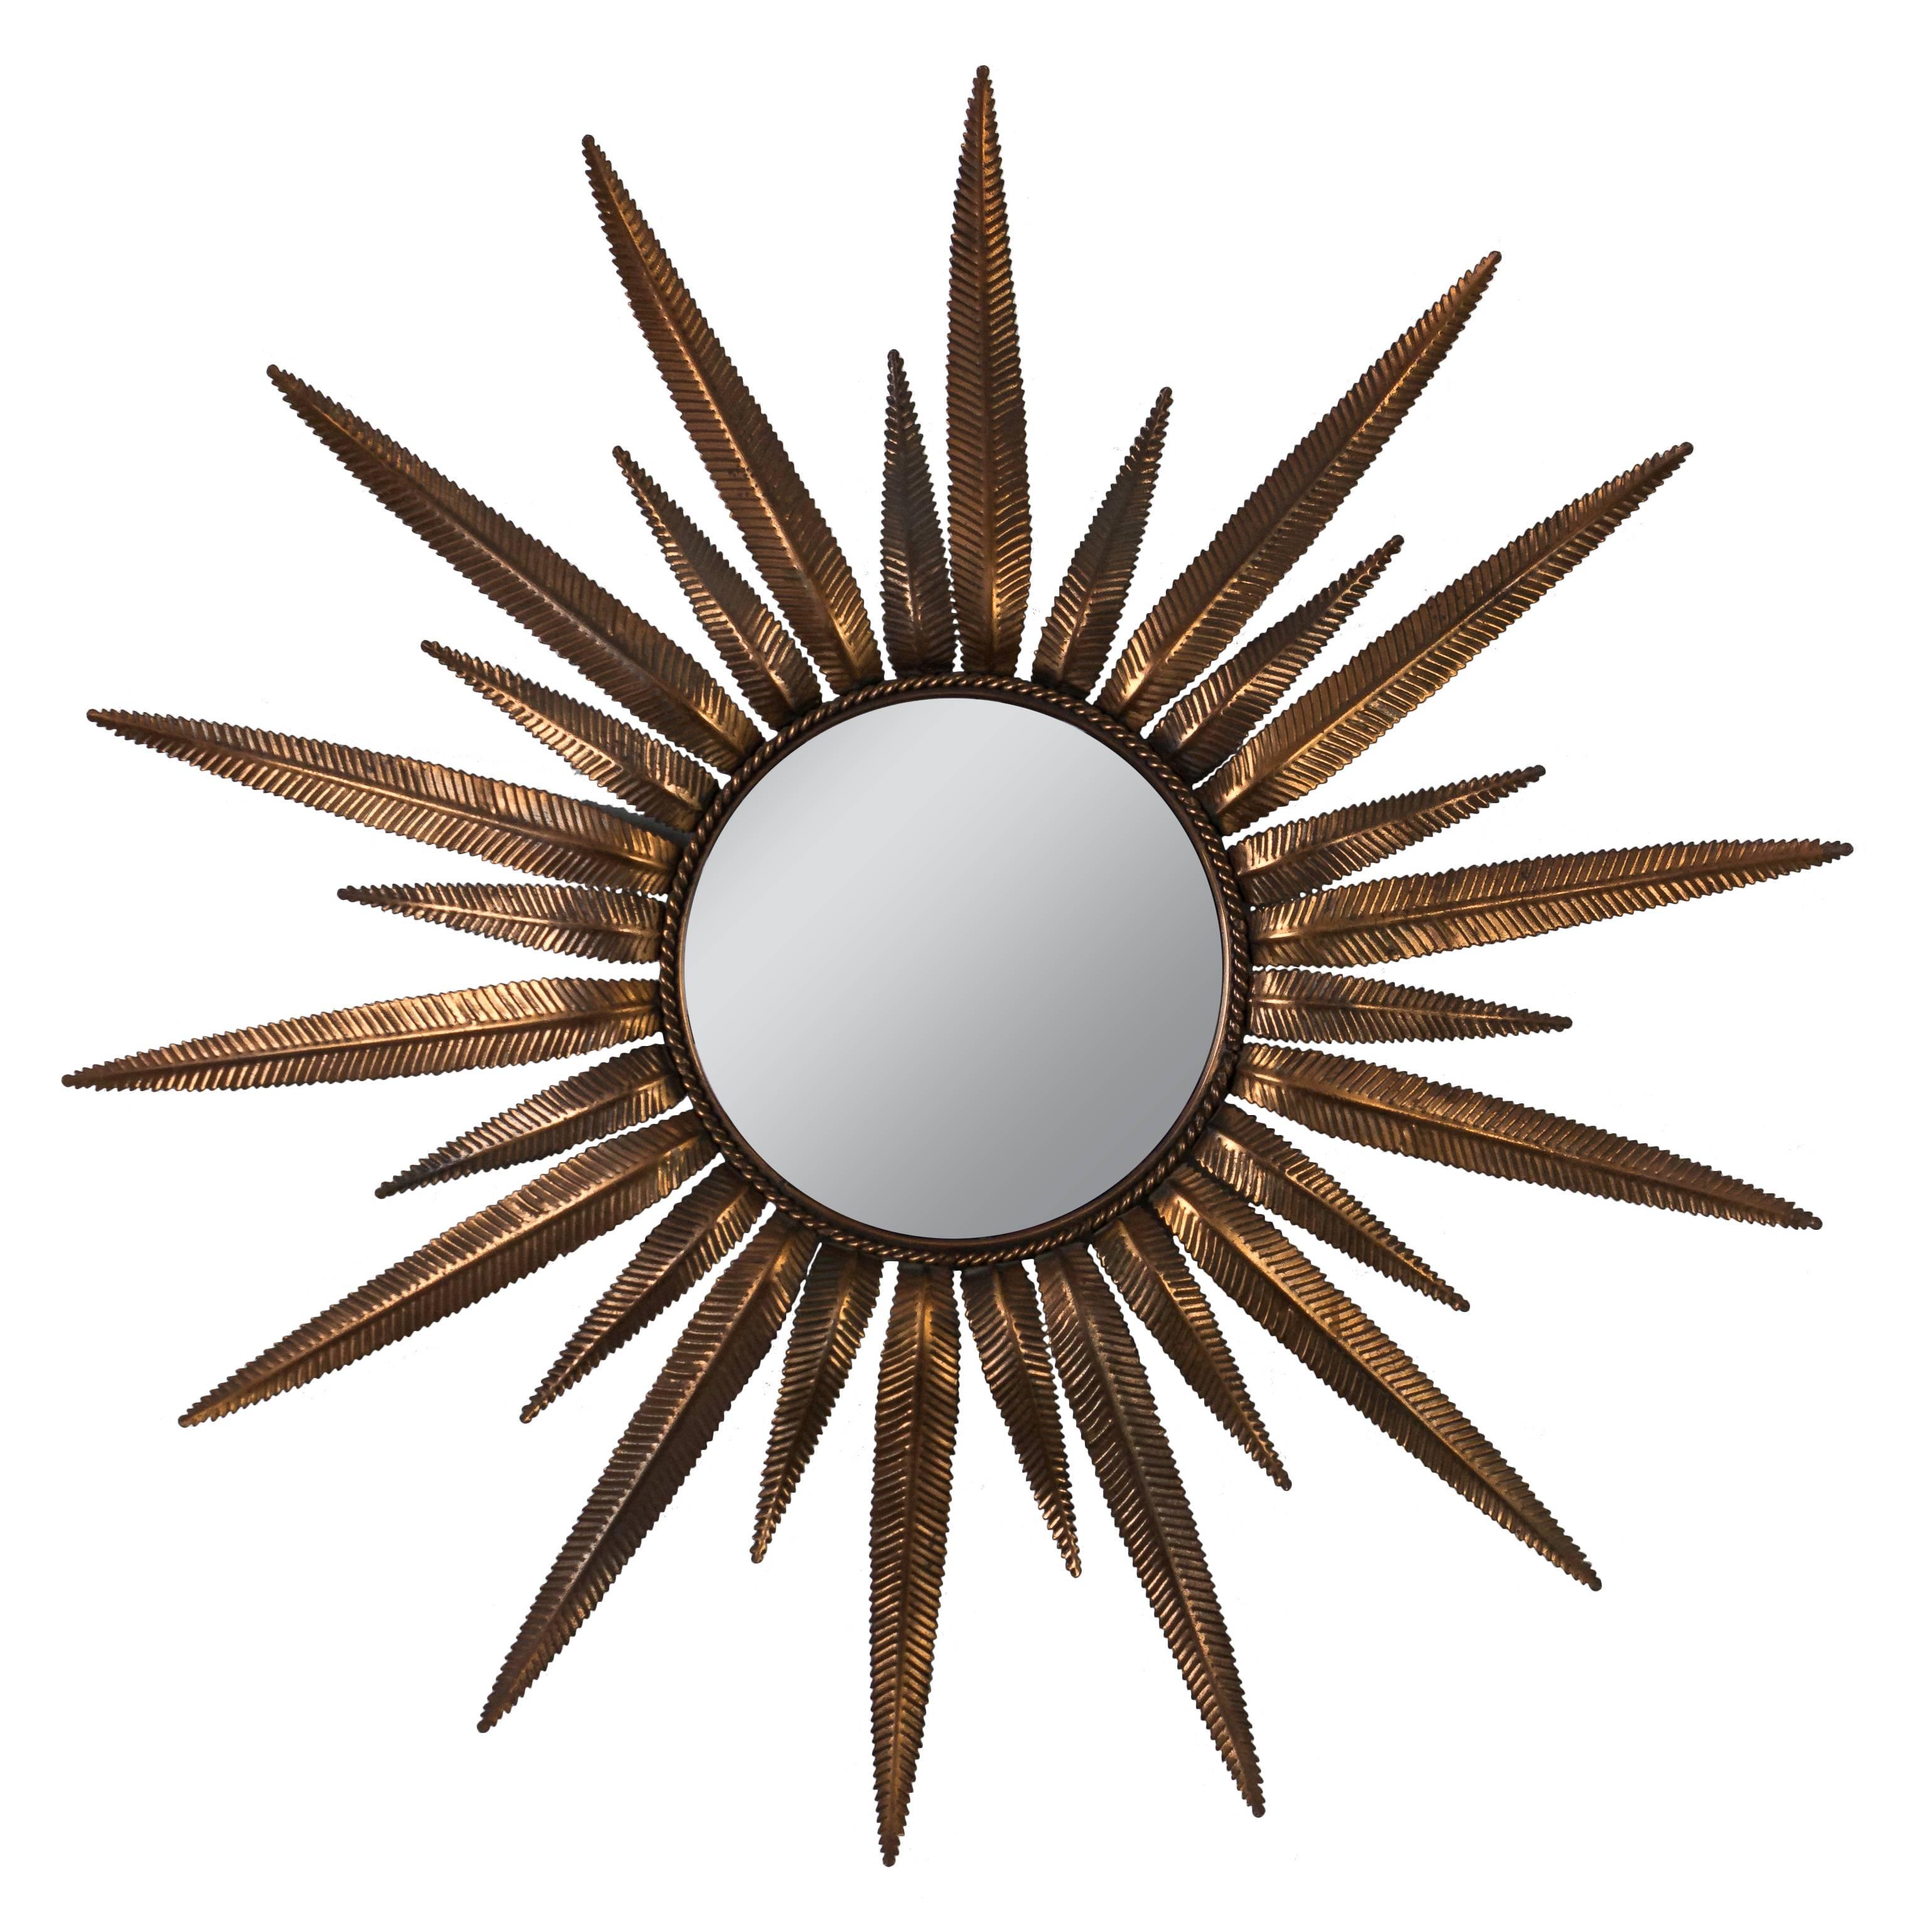  Spanish Copper Plated Metal Sunburst Mirror with Fern Leaf Frame For Sale